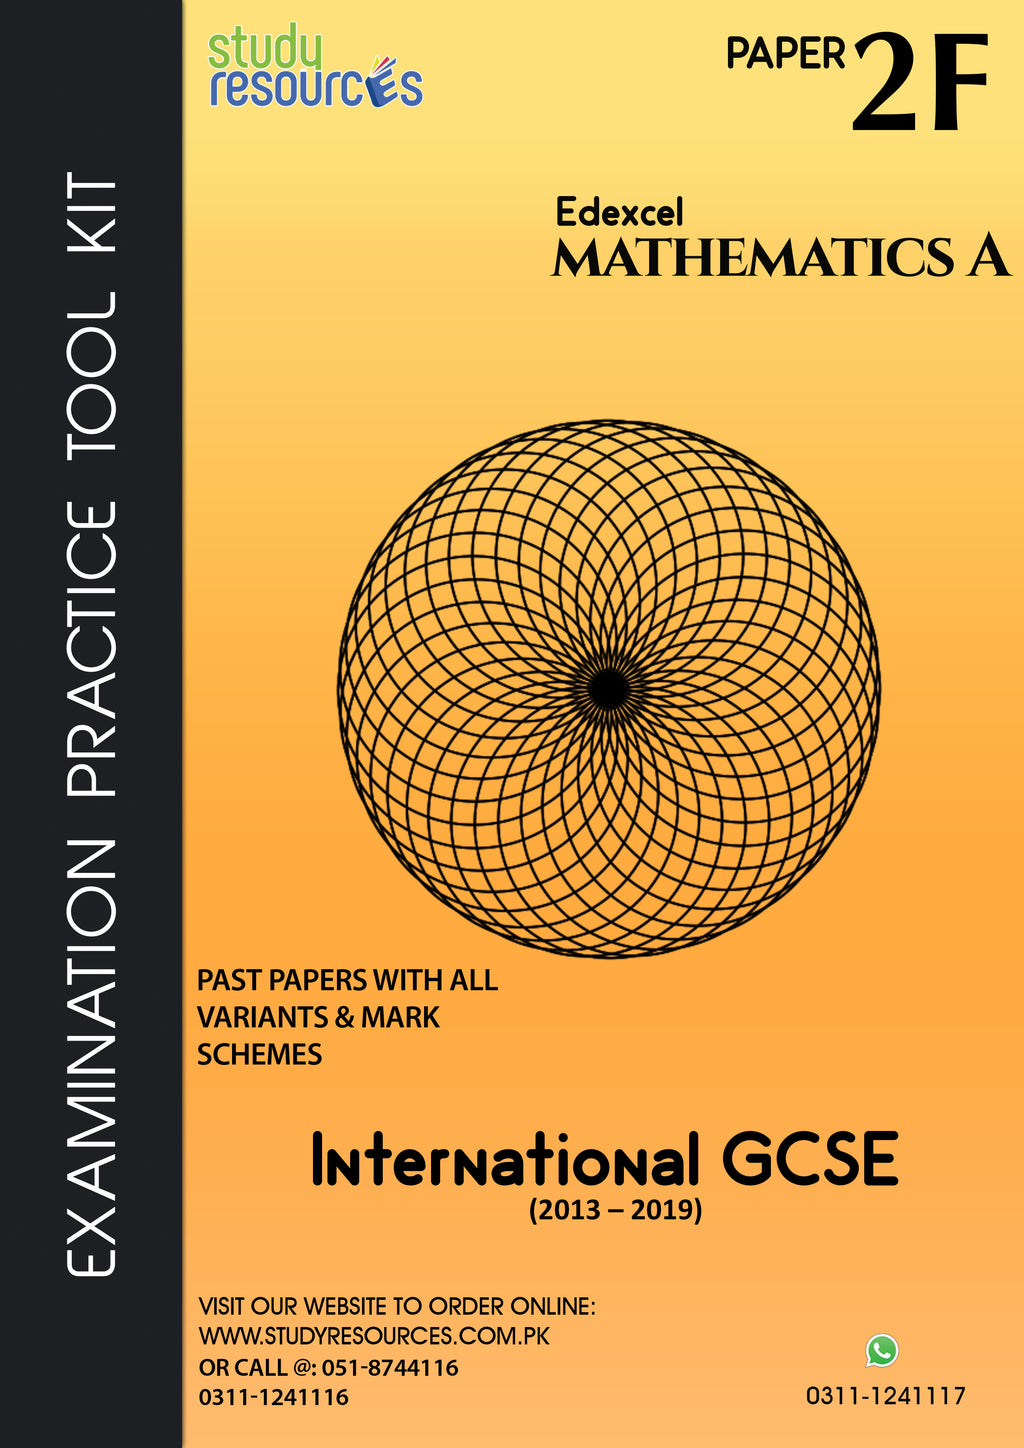 Edexcel IGCSE Mathematics "A" Paper-2F Past Papers (2013-2019)